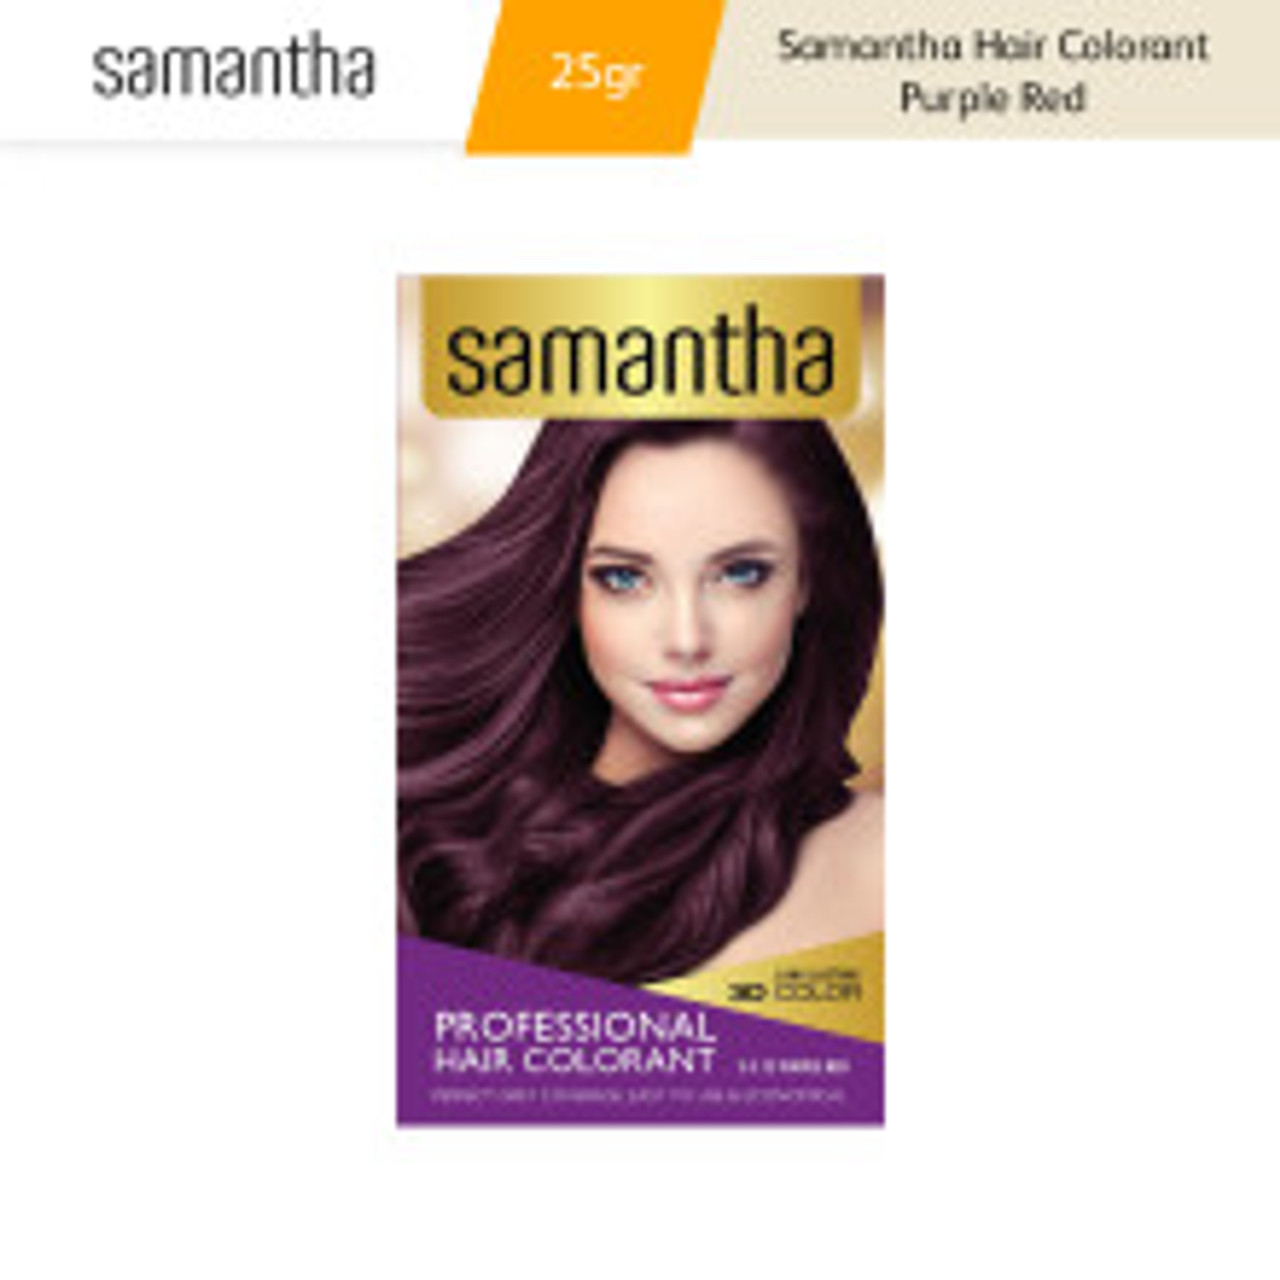 Samantha Hair Colorant Purple Red Box 25gr